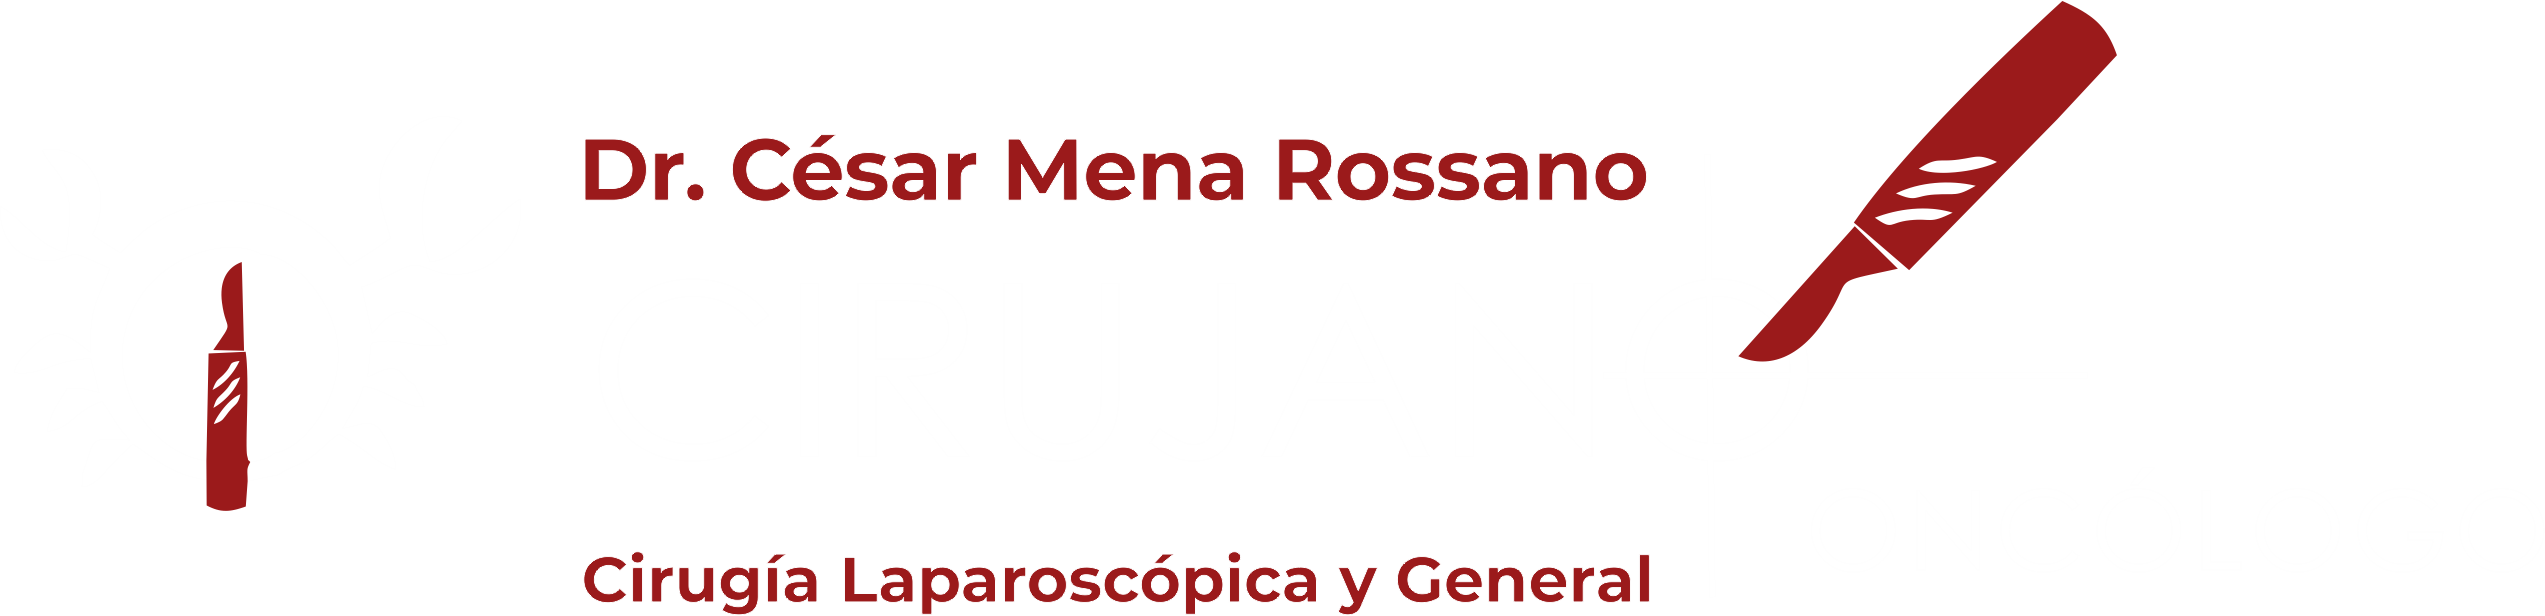 Dr. César Mena Rossano